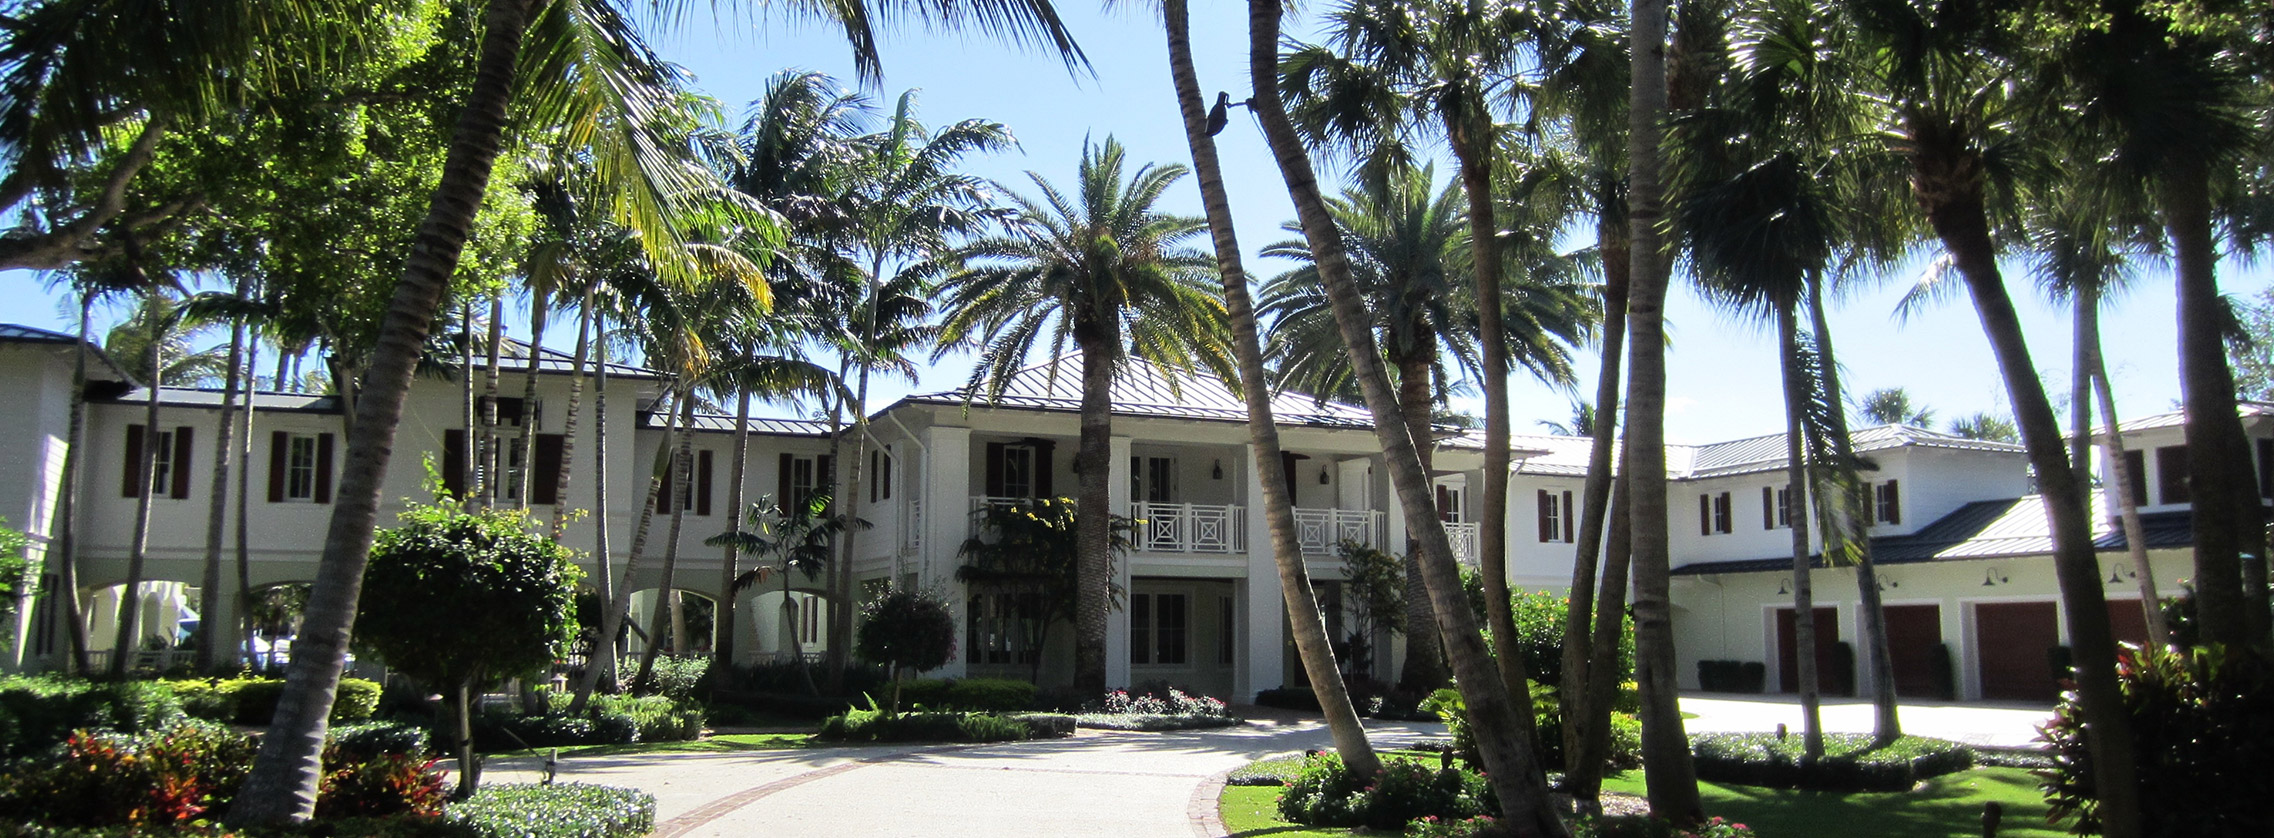 Private Residence, Boca Raton